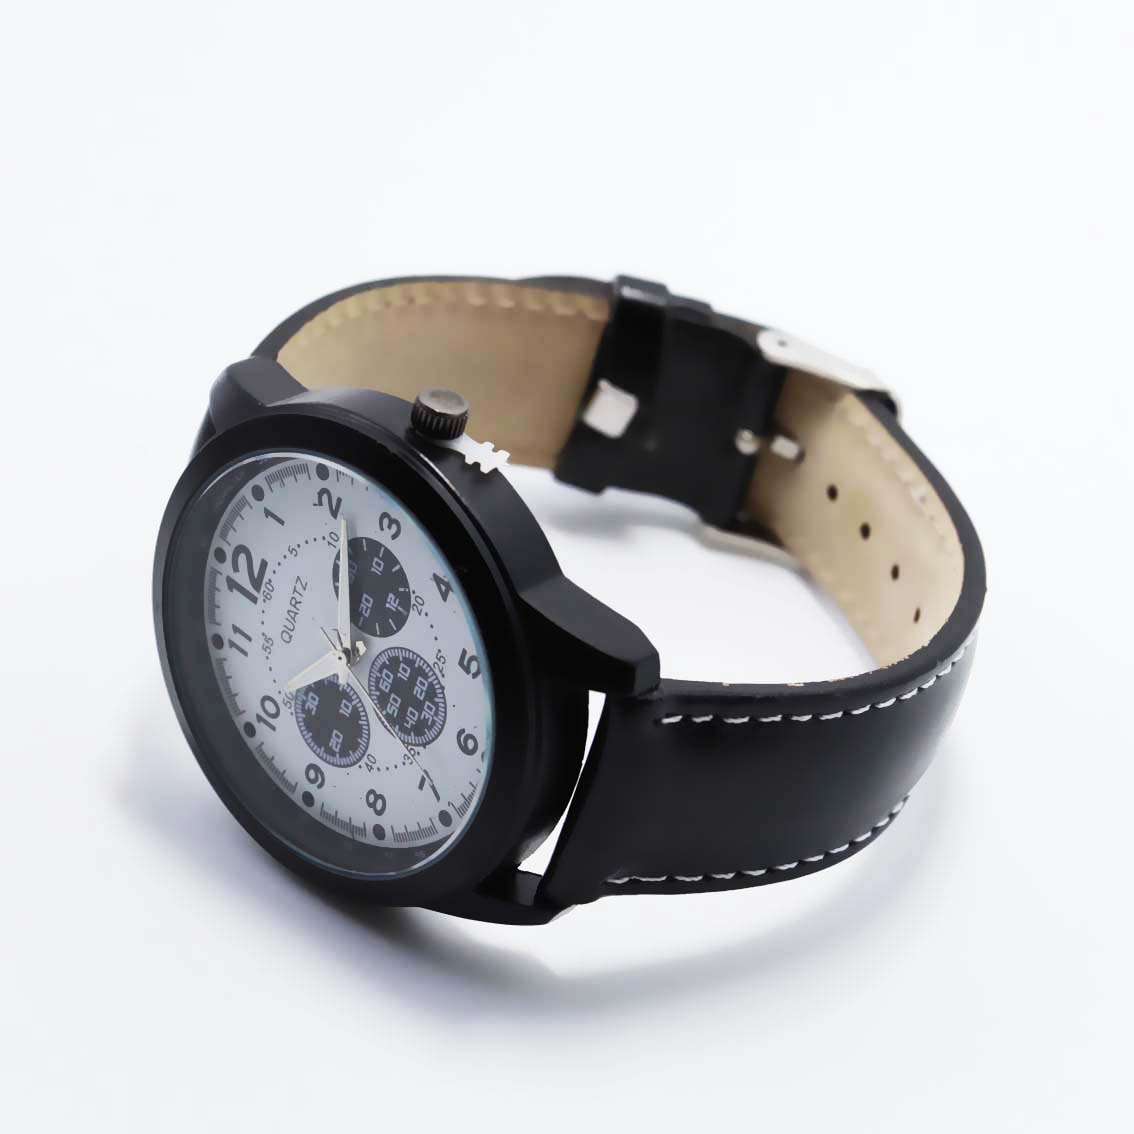 #02006Men's wristwatch quartz analog leather men watch